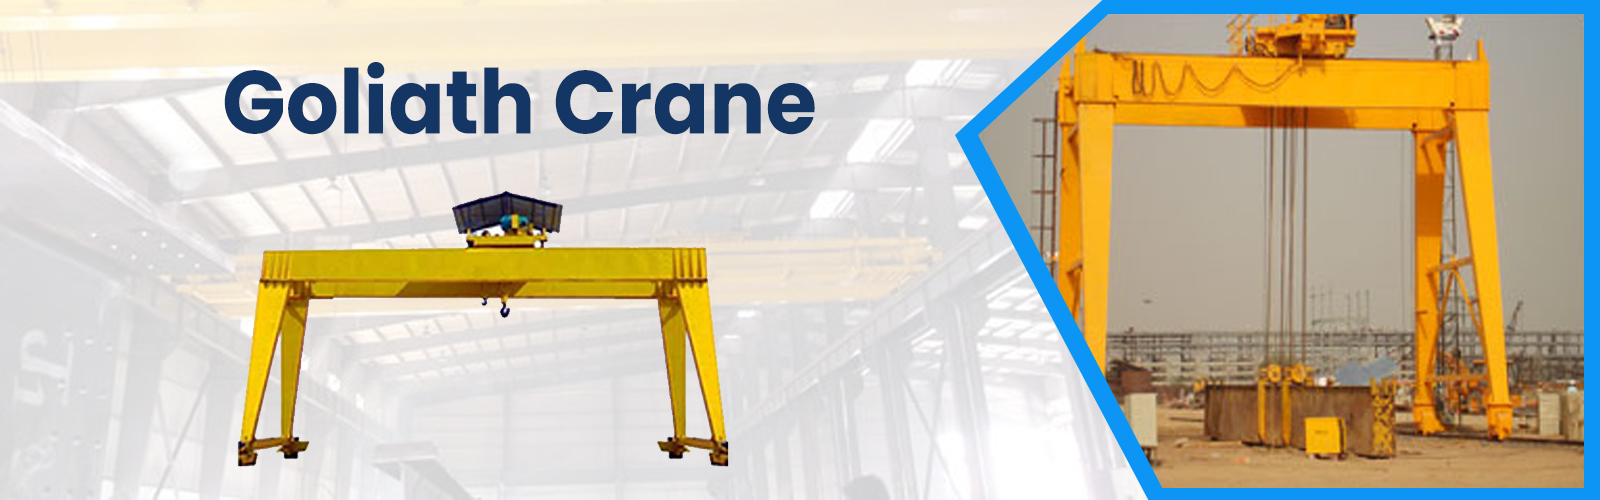 Goliath Crane Manufacturer 